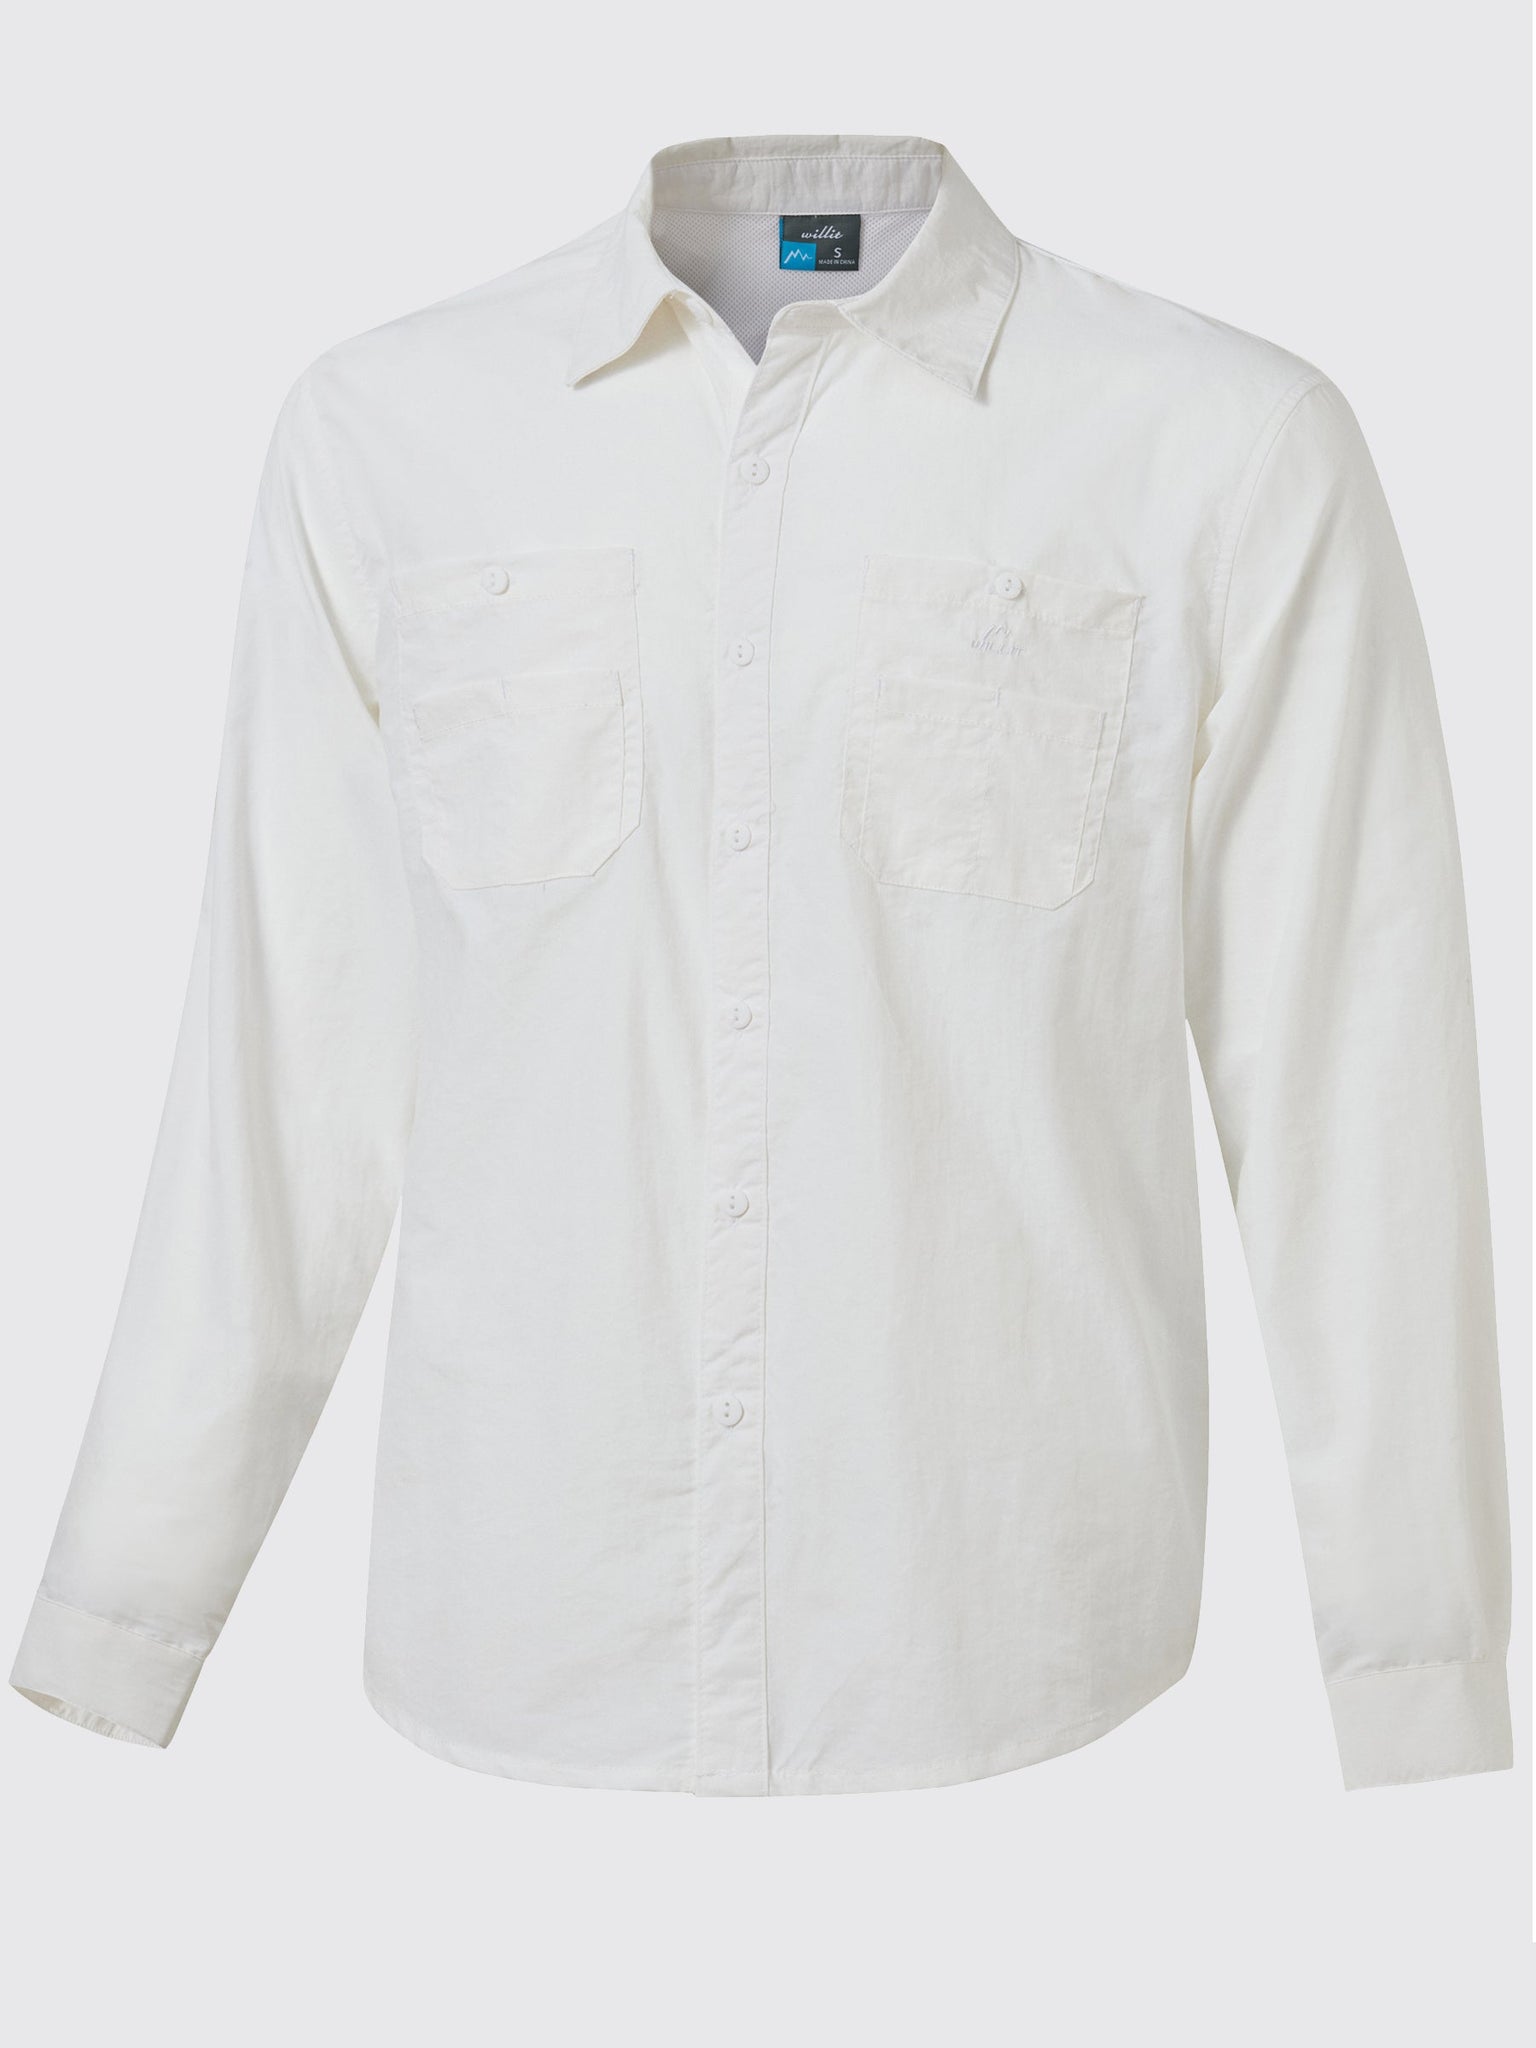 Men's Fishing Shirt Long Sleeve Hiking Shirts_White1